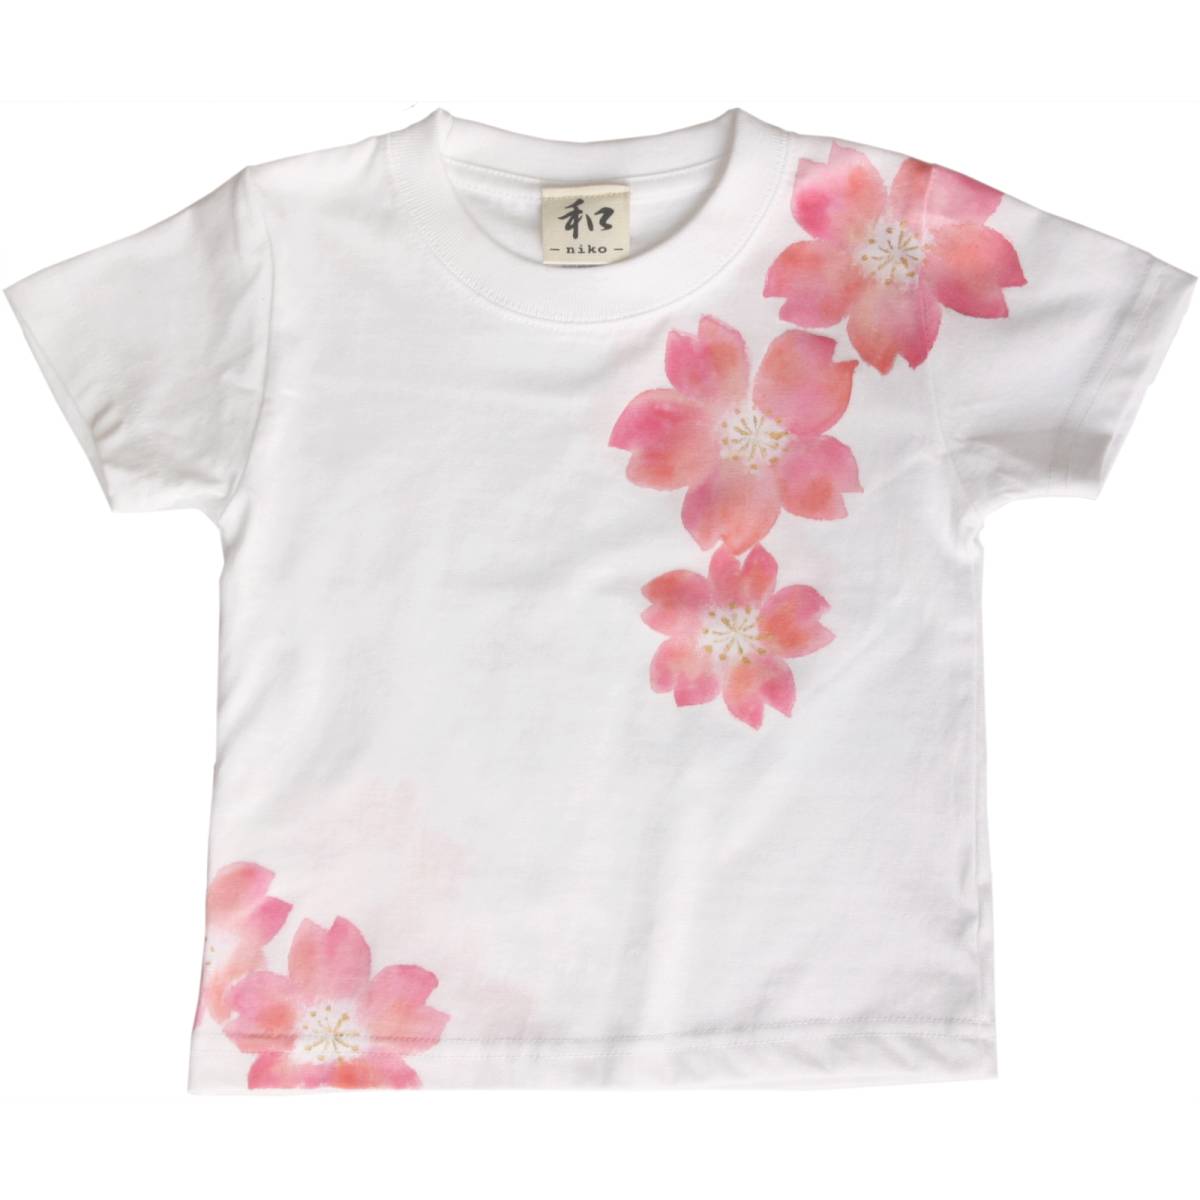 Children's Clothes Kids T-Shirt Size 90 White Dance Cherry Blossom Pattern T-Shirt Handmade Hand-Painted T-Shirt Japanese Pattern Spring White, short sleeve, for girls, 90(85~94cm)